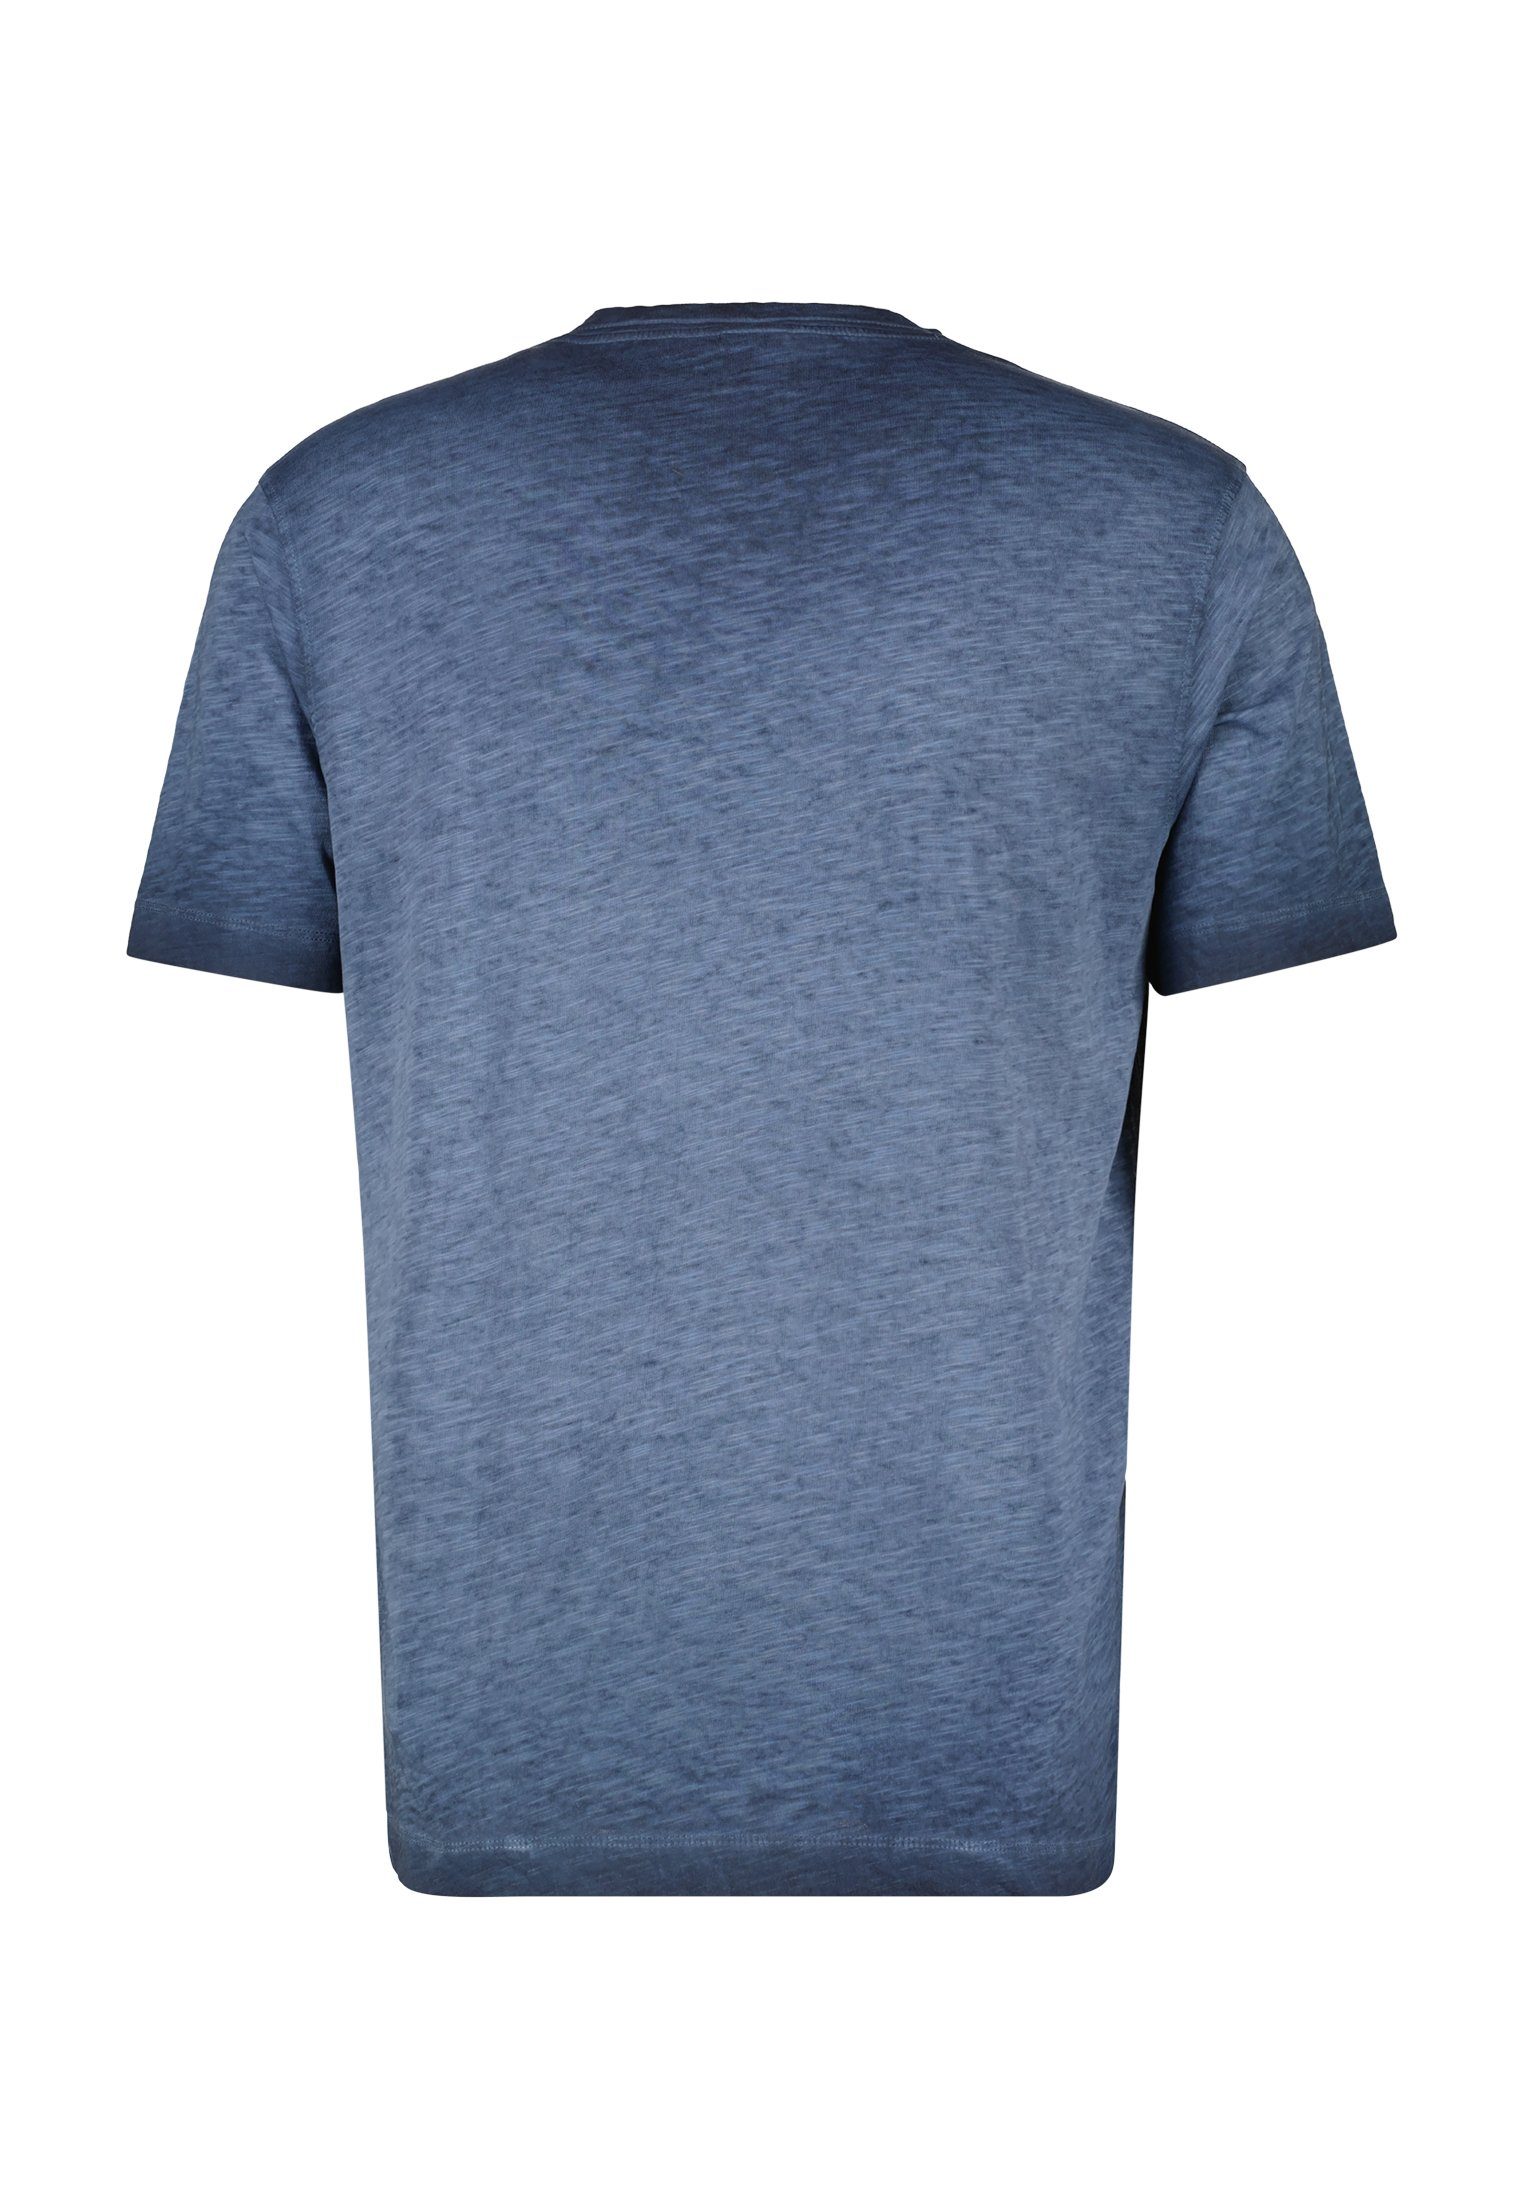 LERROS V-Shirt CLASSIC melange faded NAVY V-Neck-Shirt, LERROS